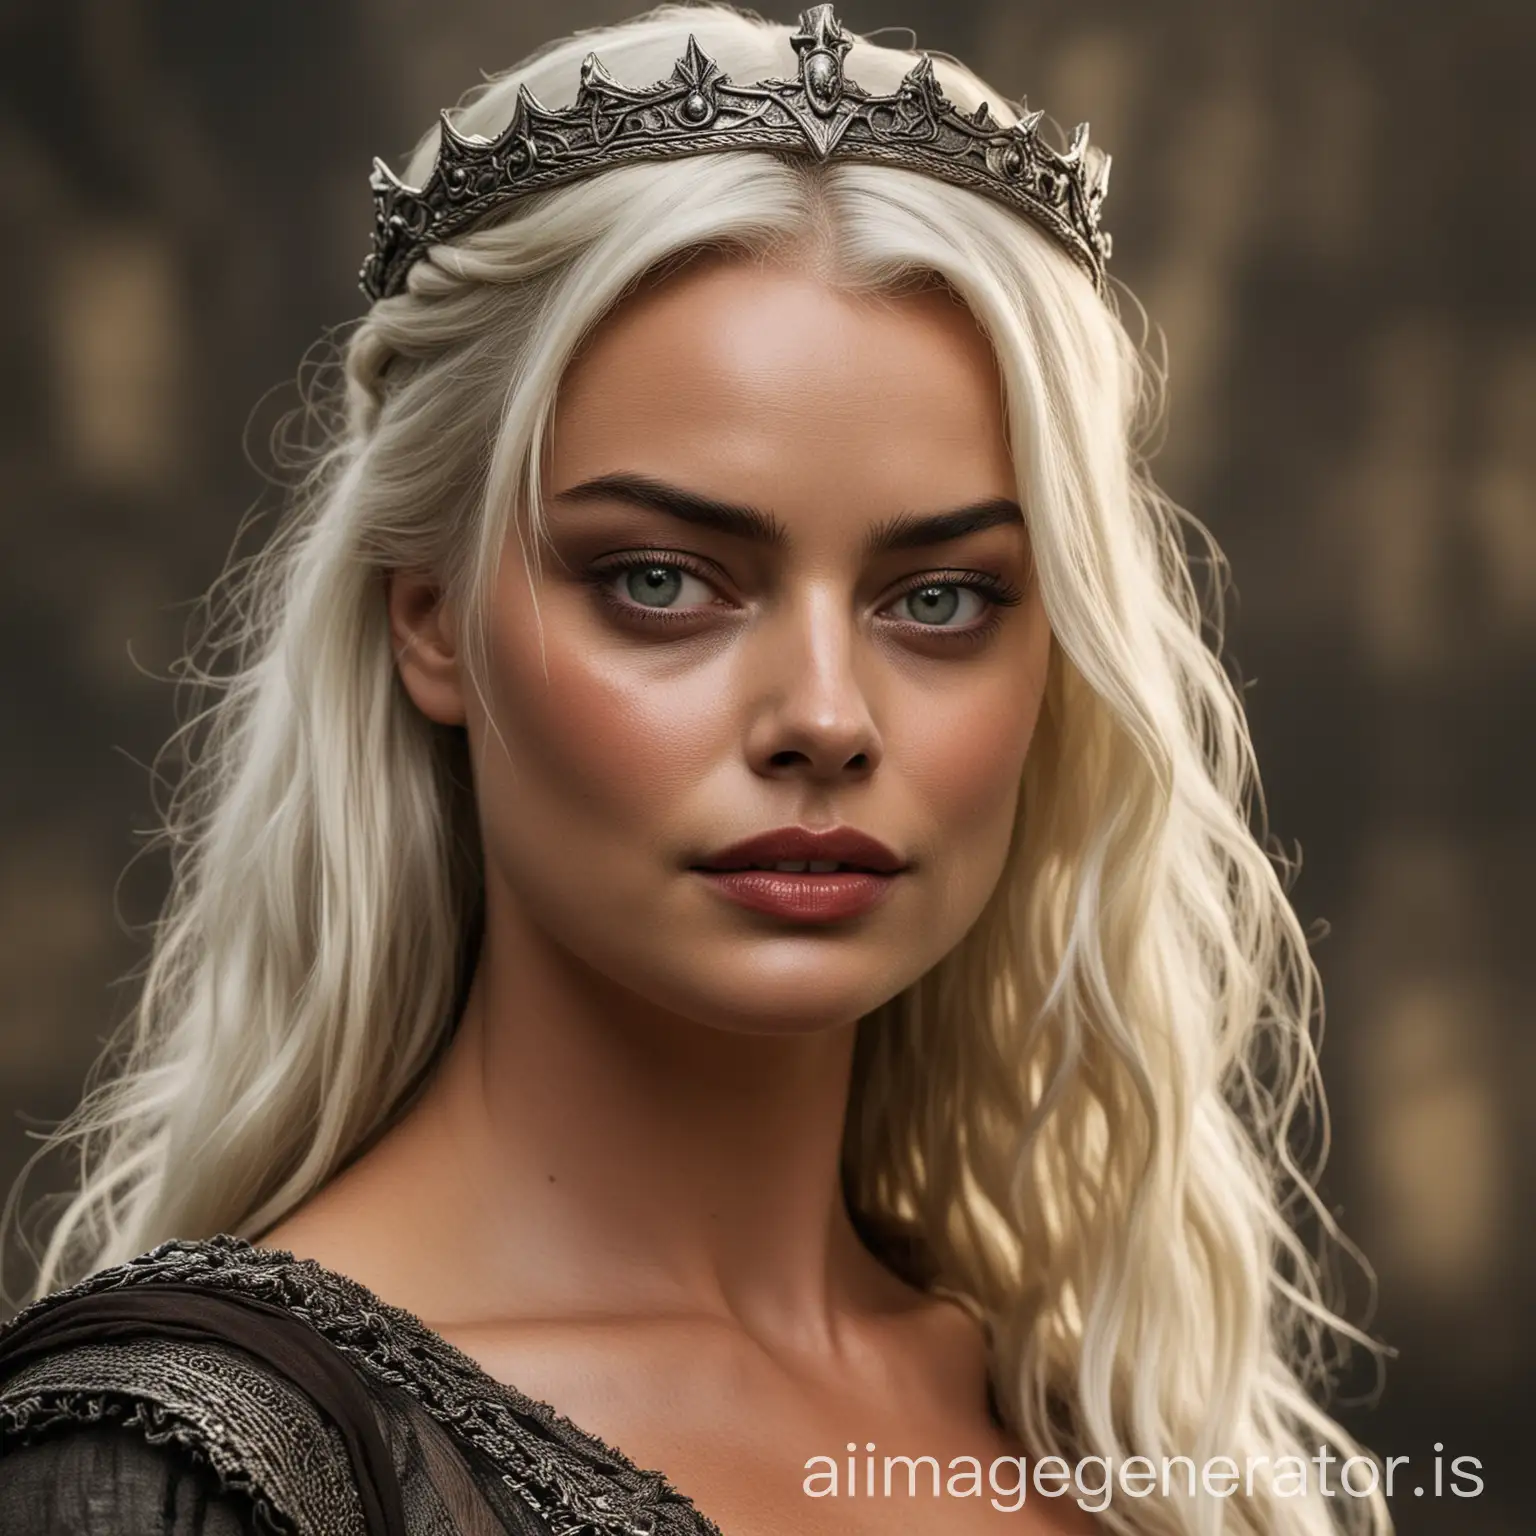 Margot Robbie as Queen Rhaenys Targaryen